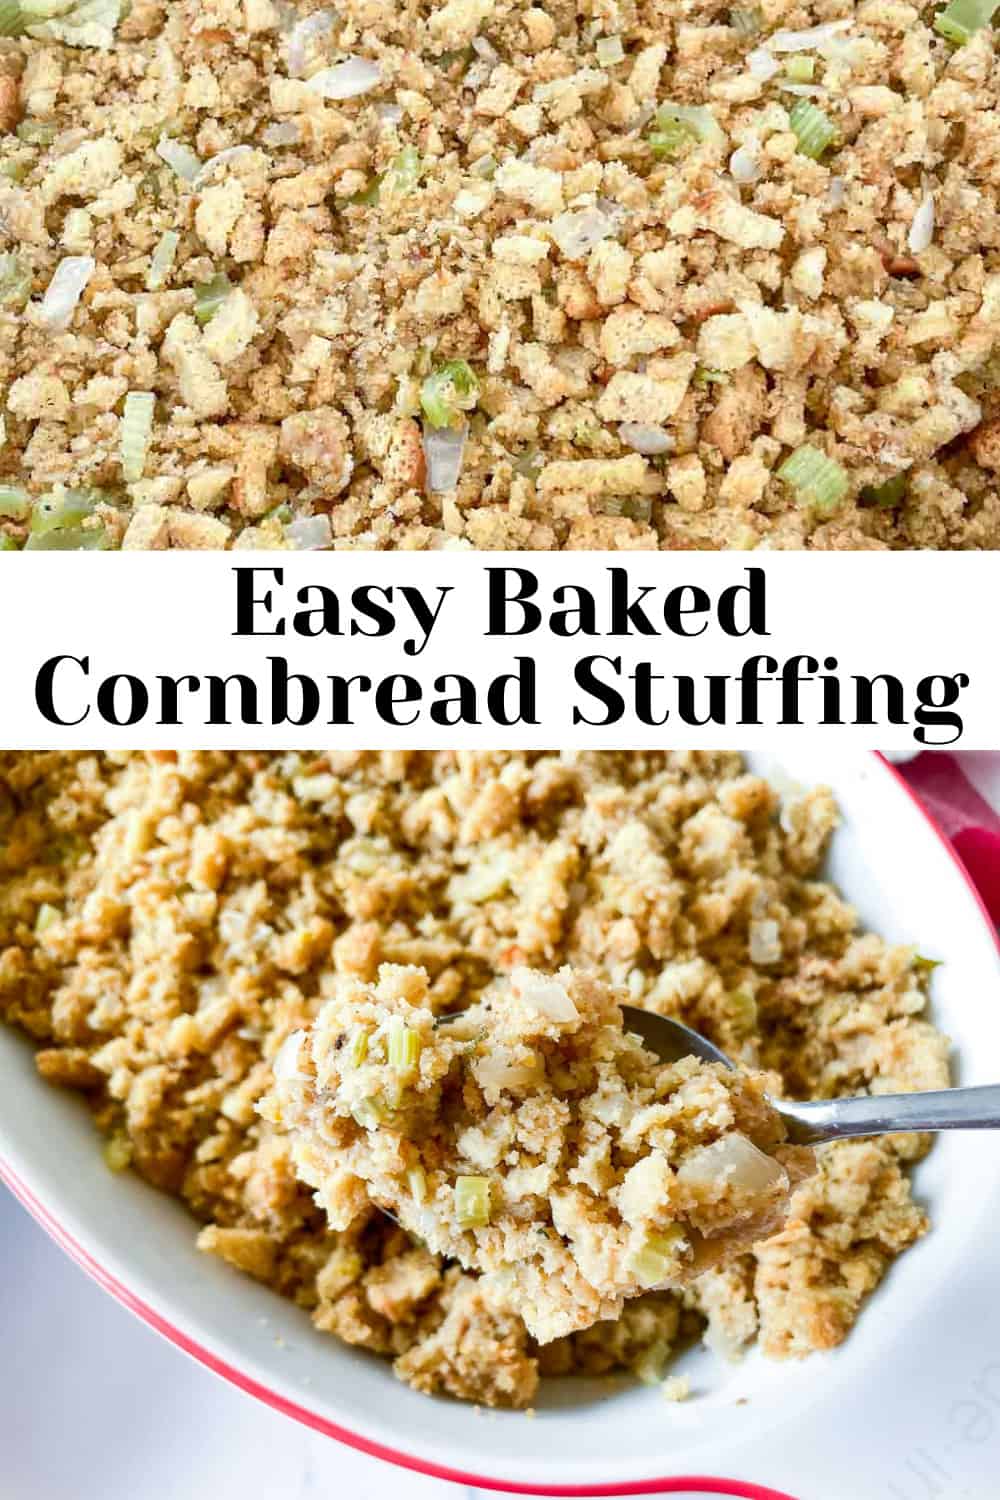 Easy baked cornbread stuffing recipe for Thanksgiving.